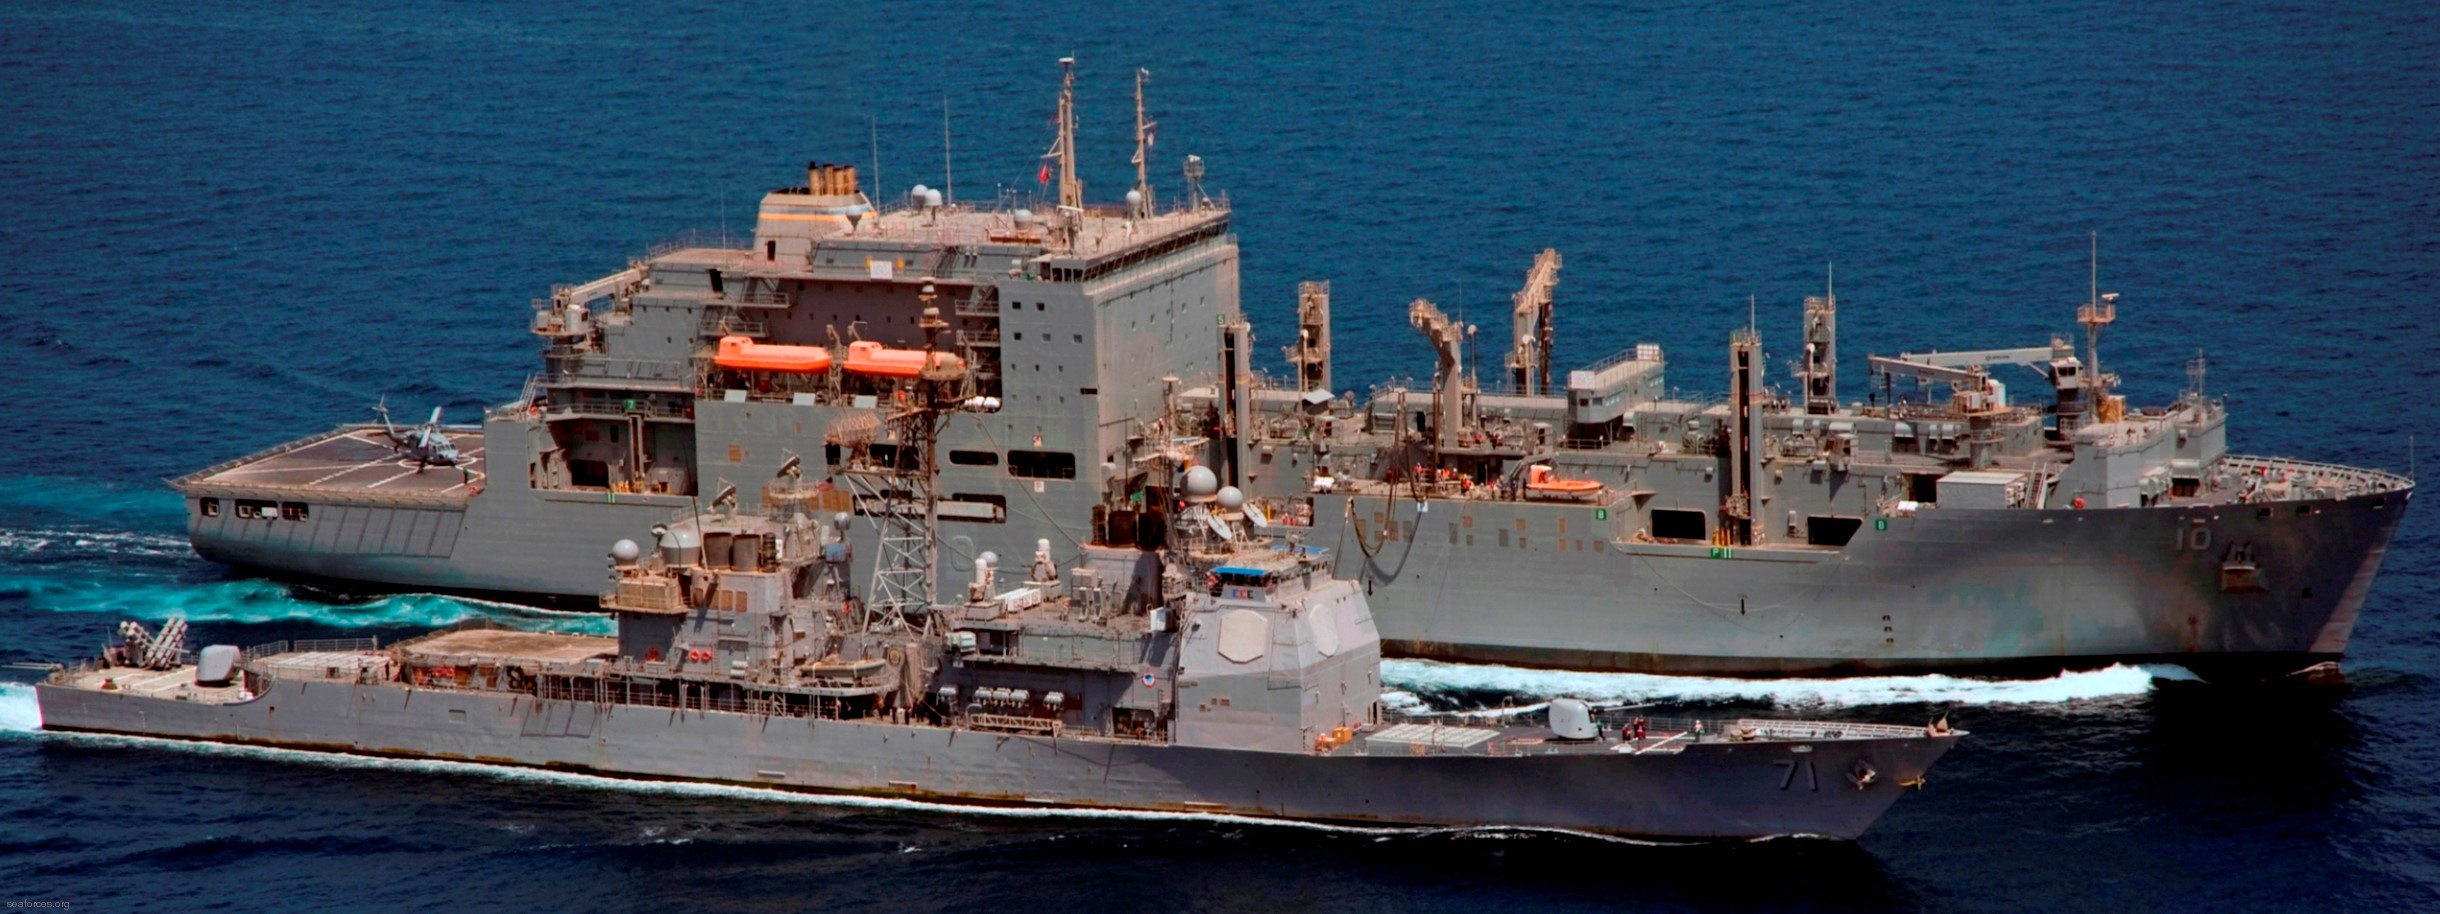 cg-71 uss cape st. george ticonderoga class guided missile cruiser us navy 34 replenishment at sea ras arabian sea